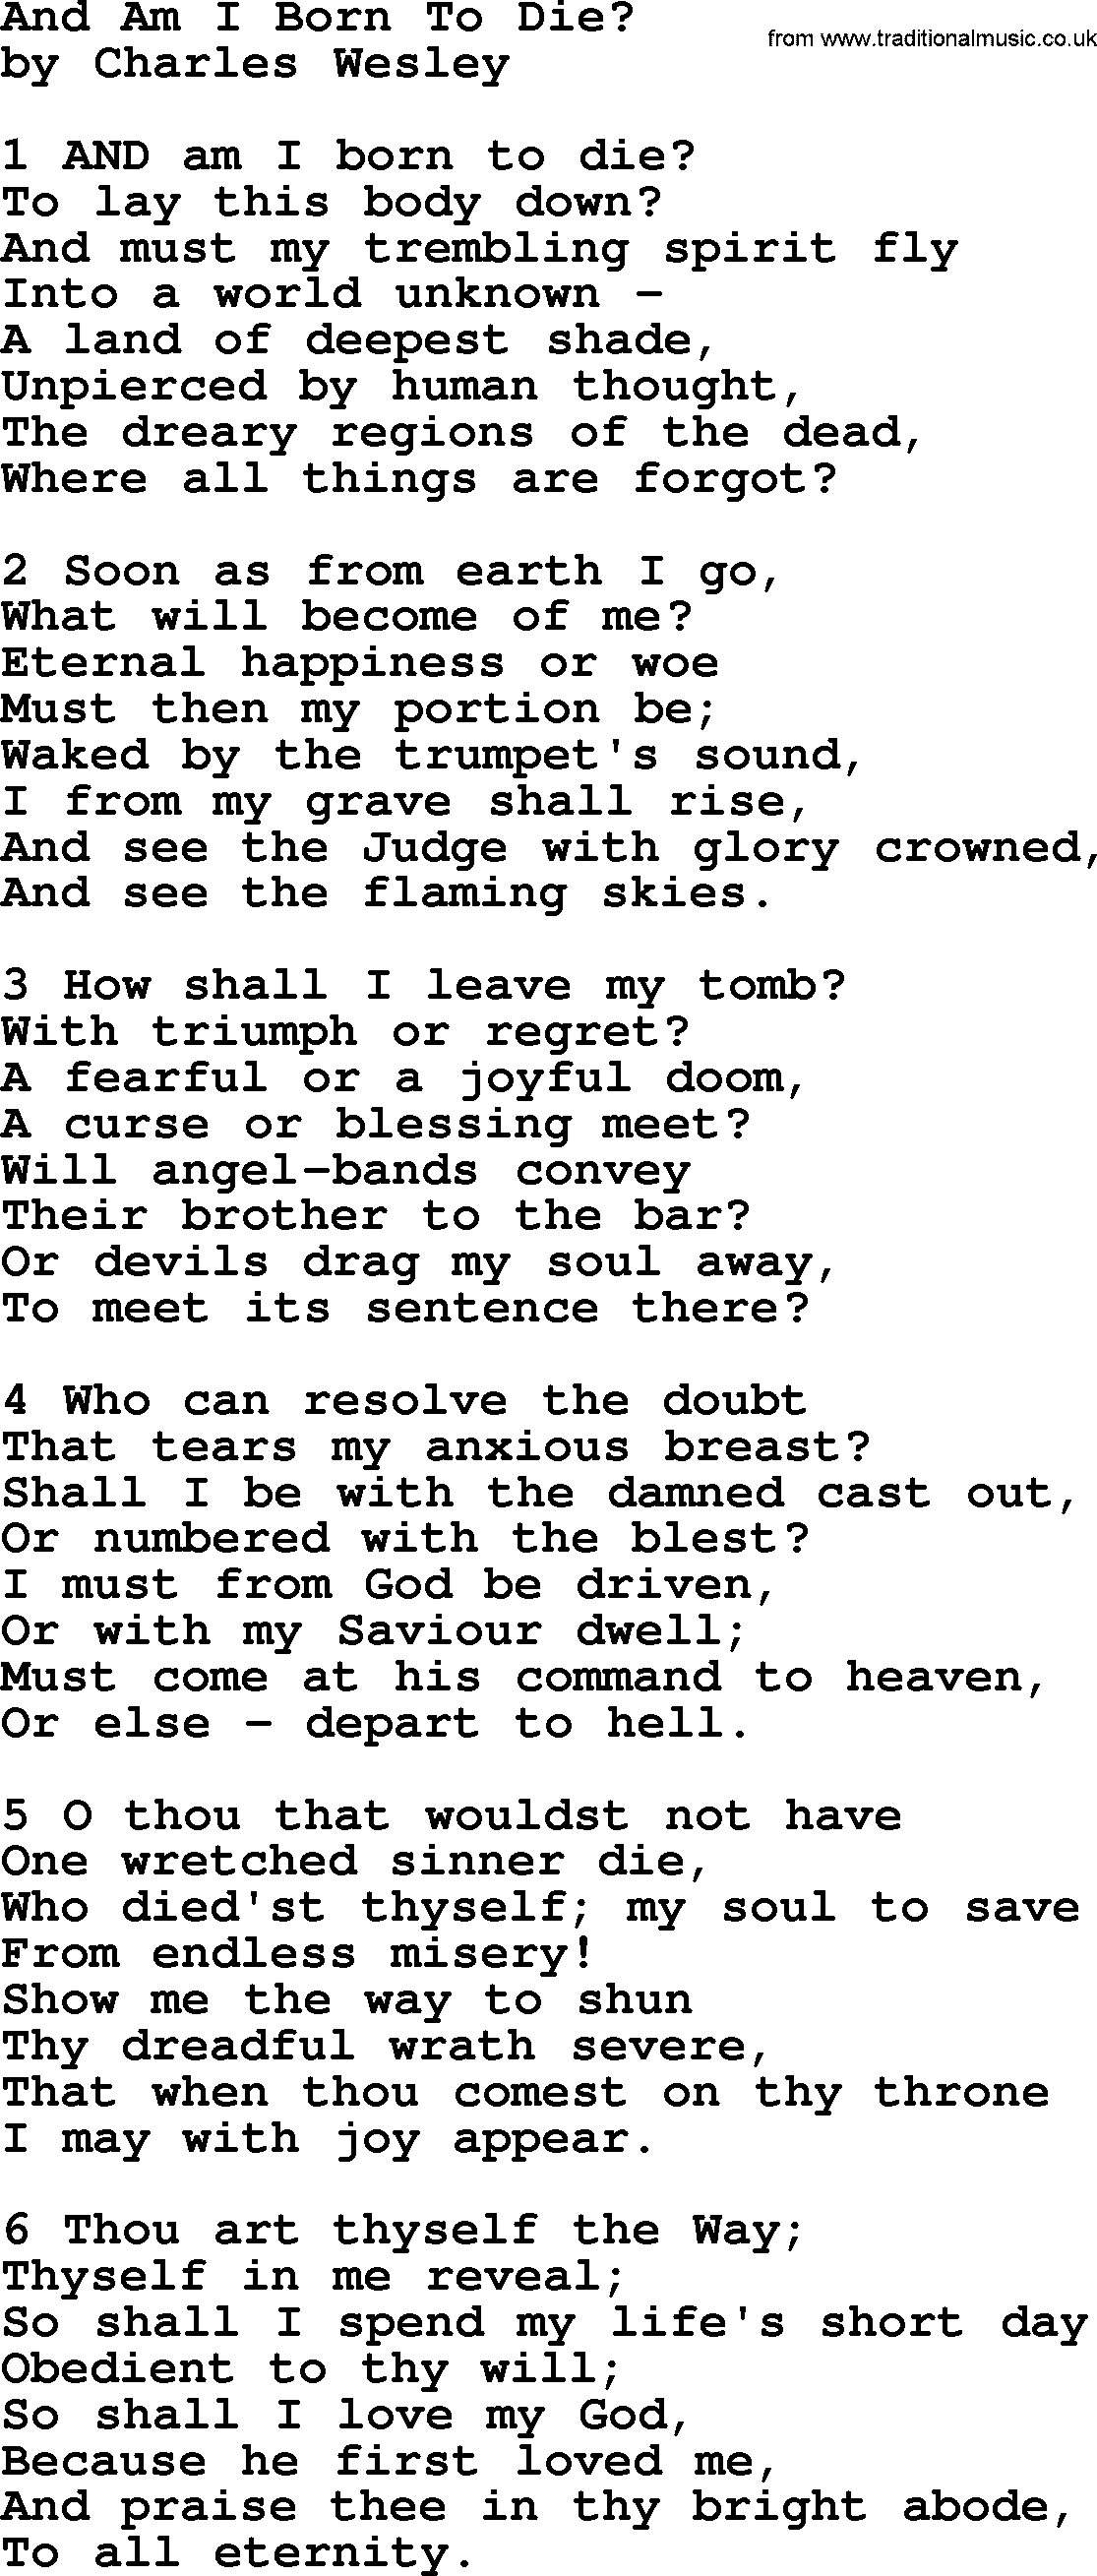 Charles Wesley hymn: And Am I Born To Die, lyrics